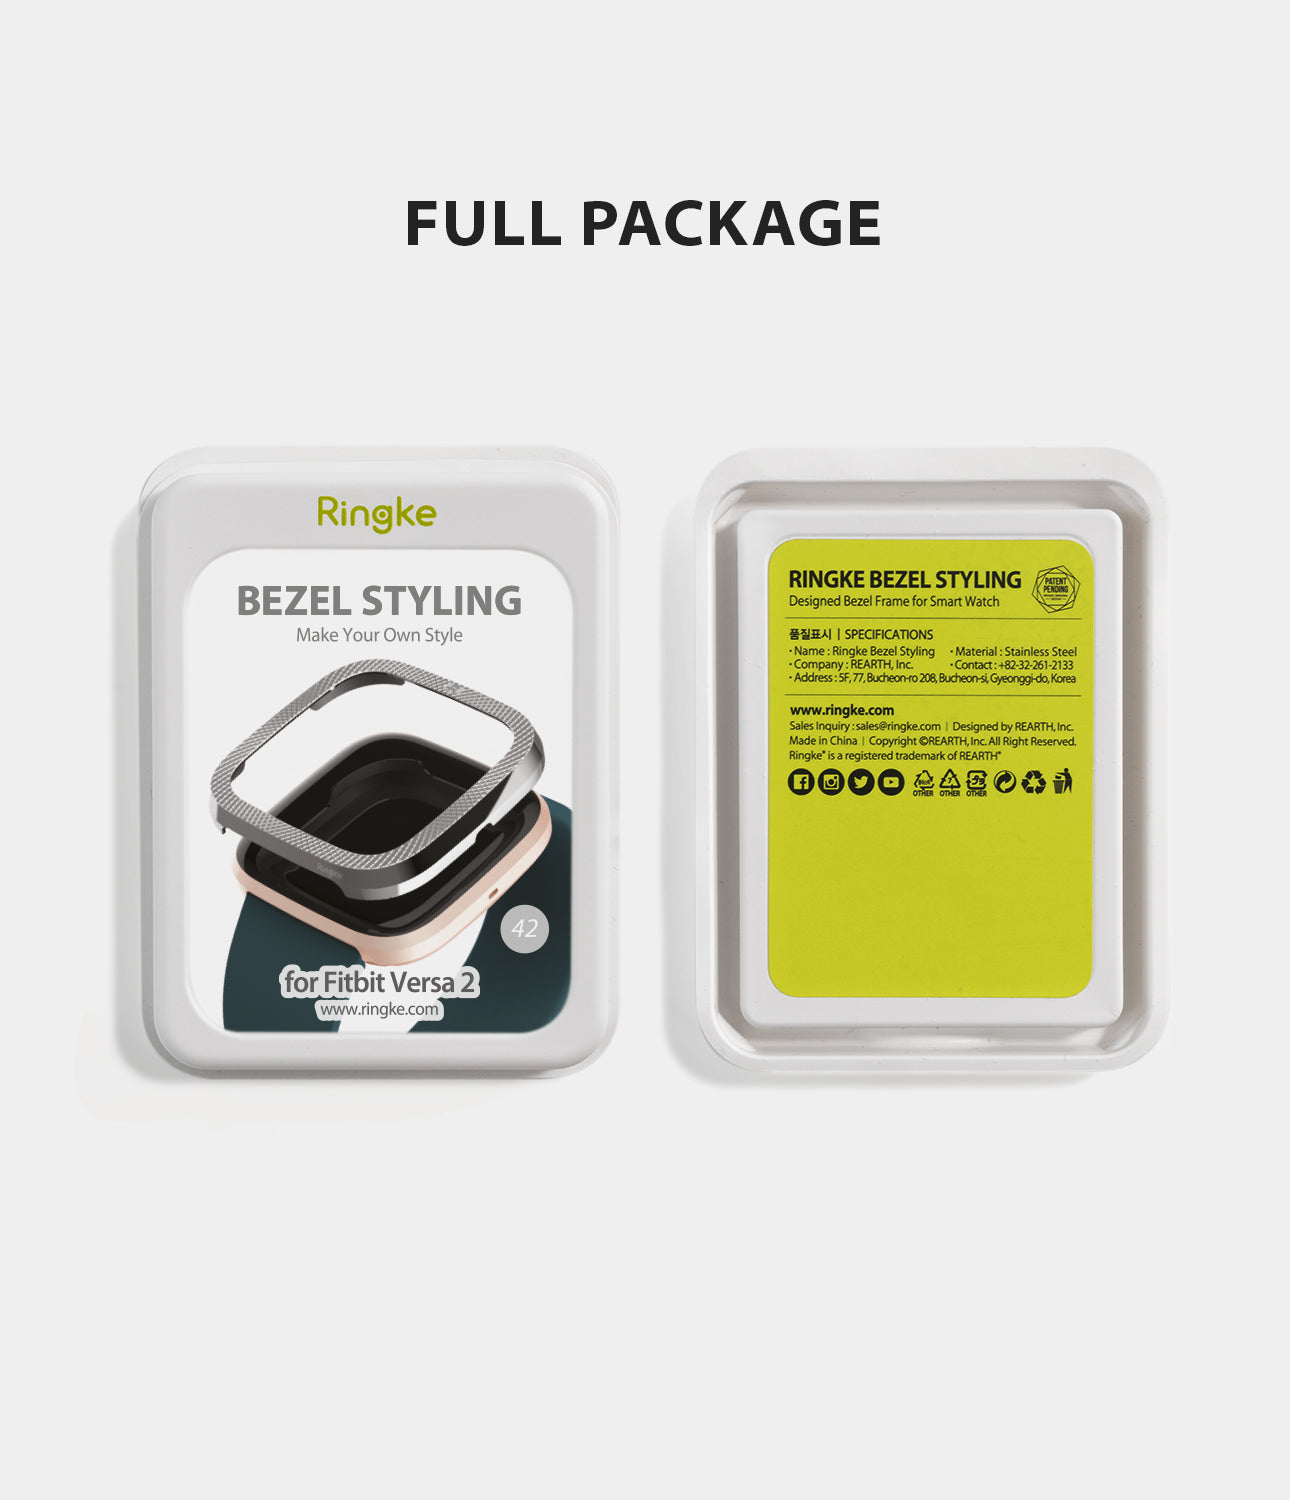 Ringke Bezel Styling Full Stainless Steel Frame Case for Fitbit Versa 2, Silver, 2-42 ST, Knurling Engraved Design, minimal package